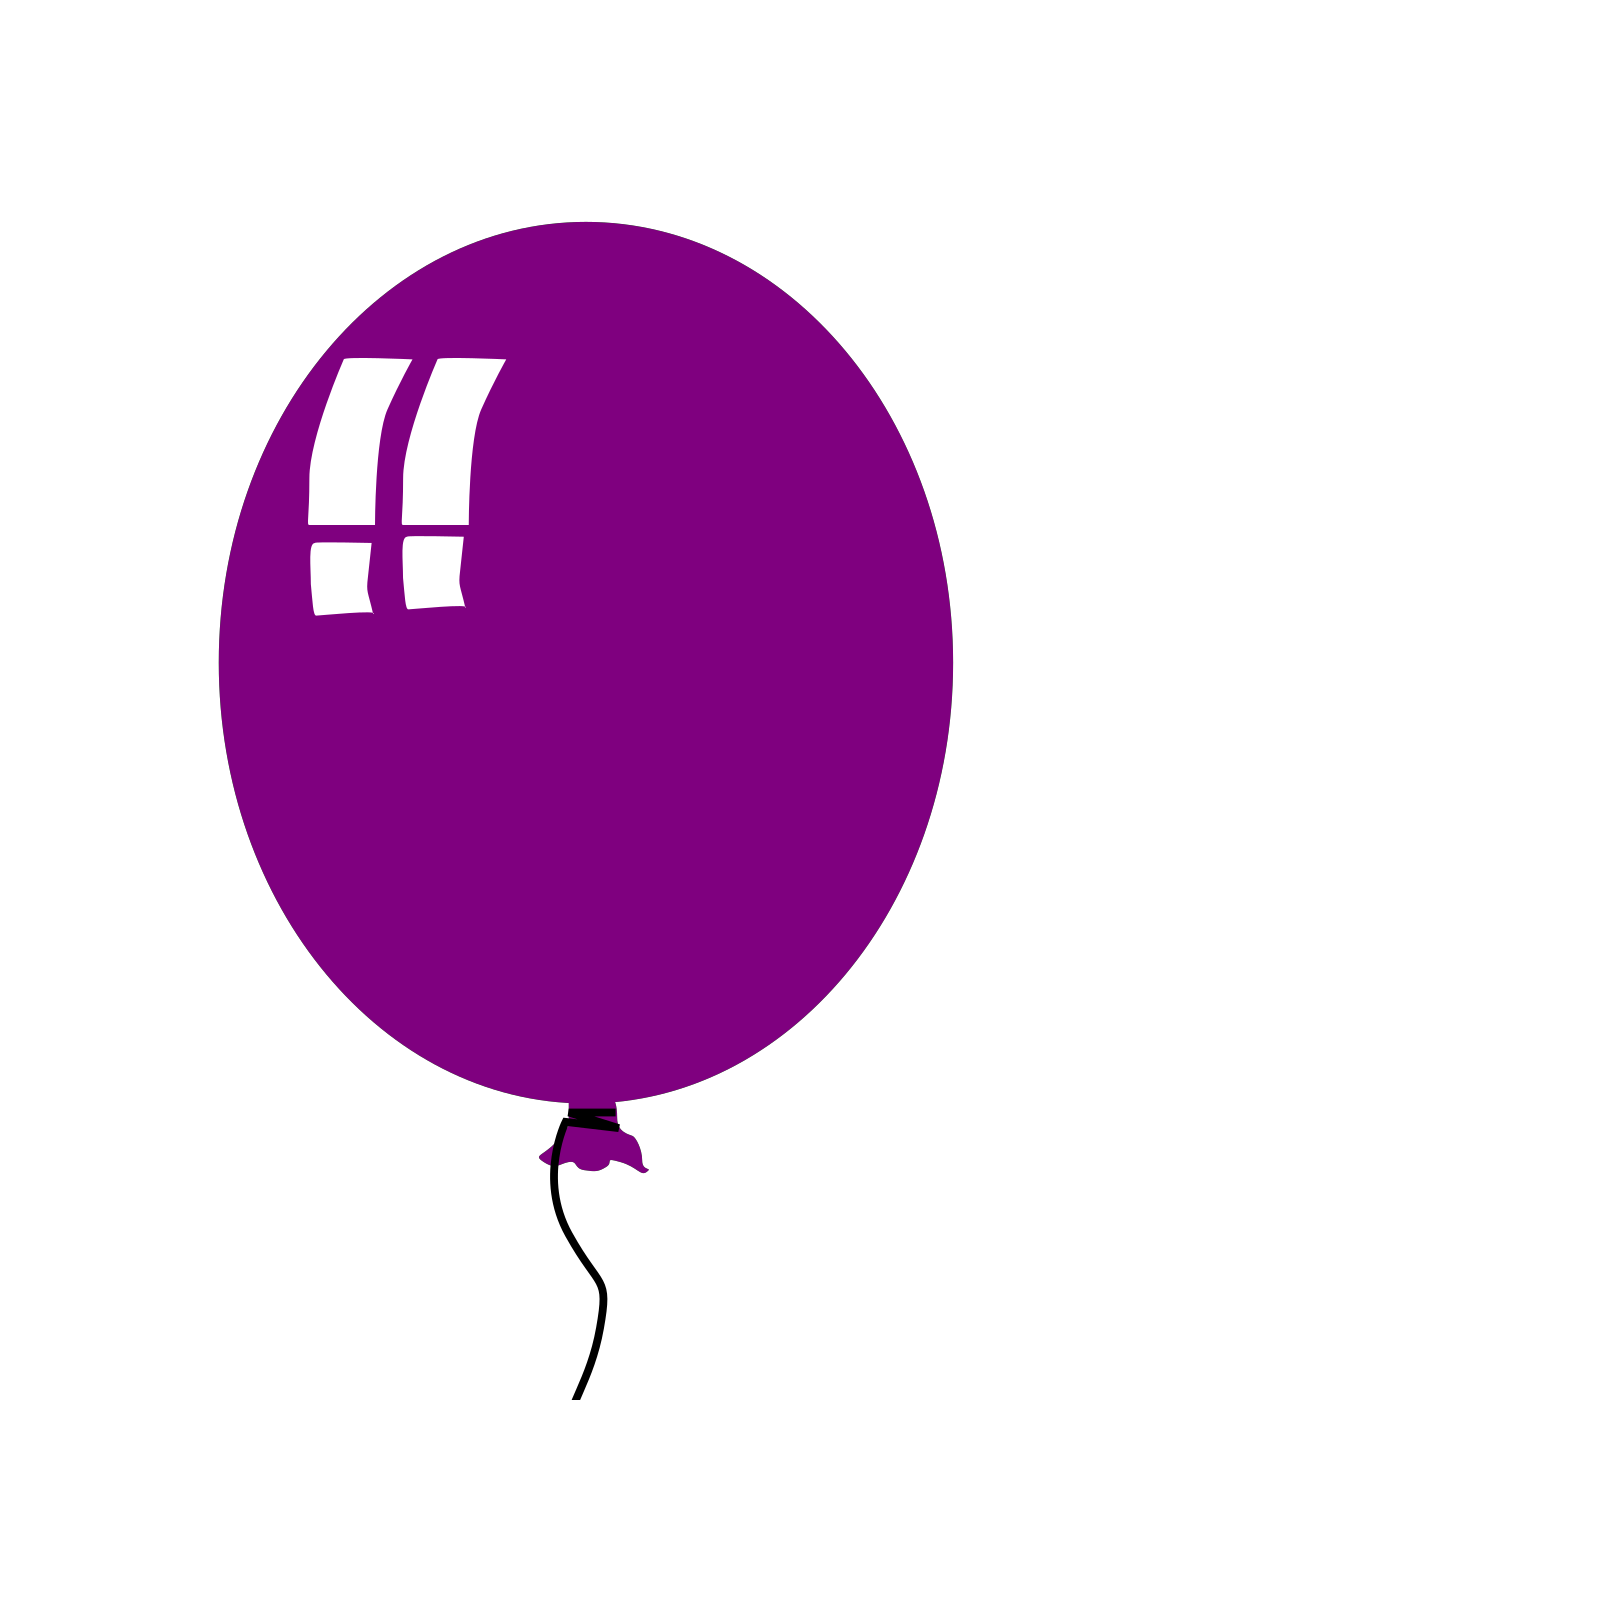 Imagen Transparente de un solo globo púrpura